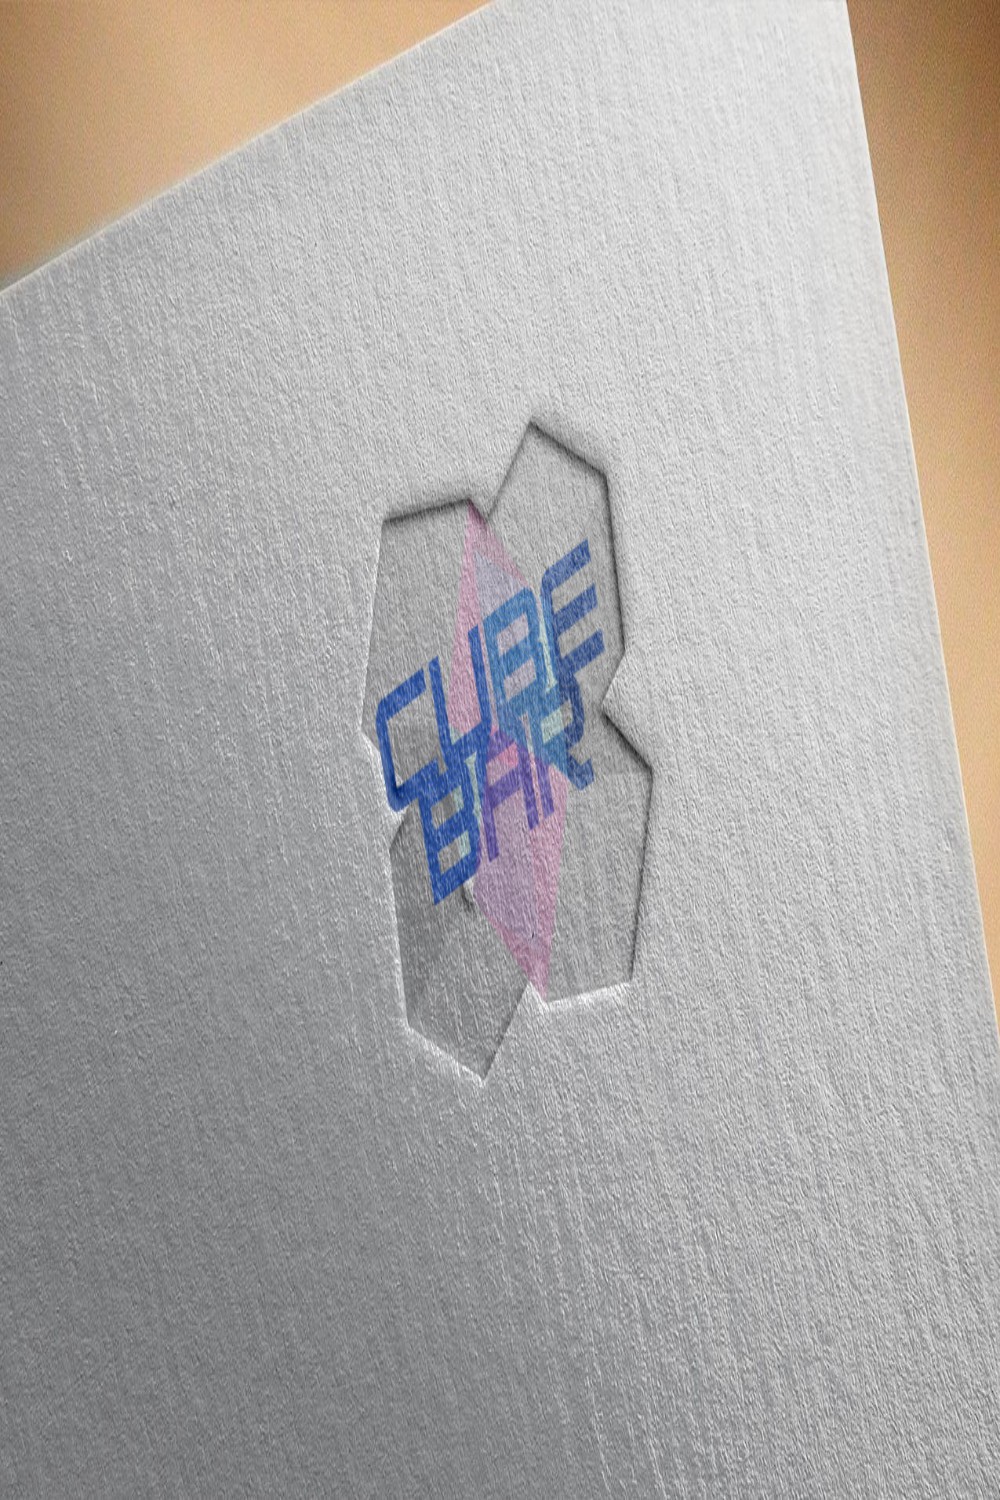 Cube Bar Logo Design Pinterest image.